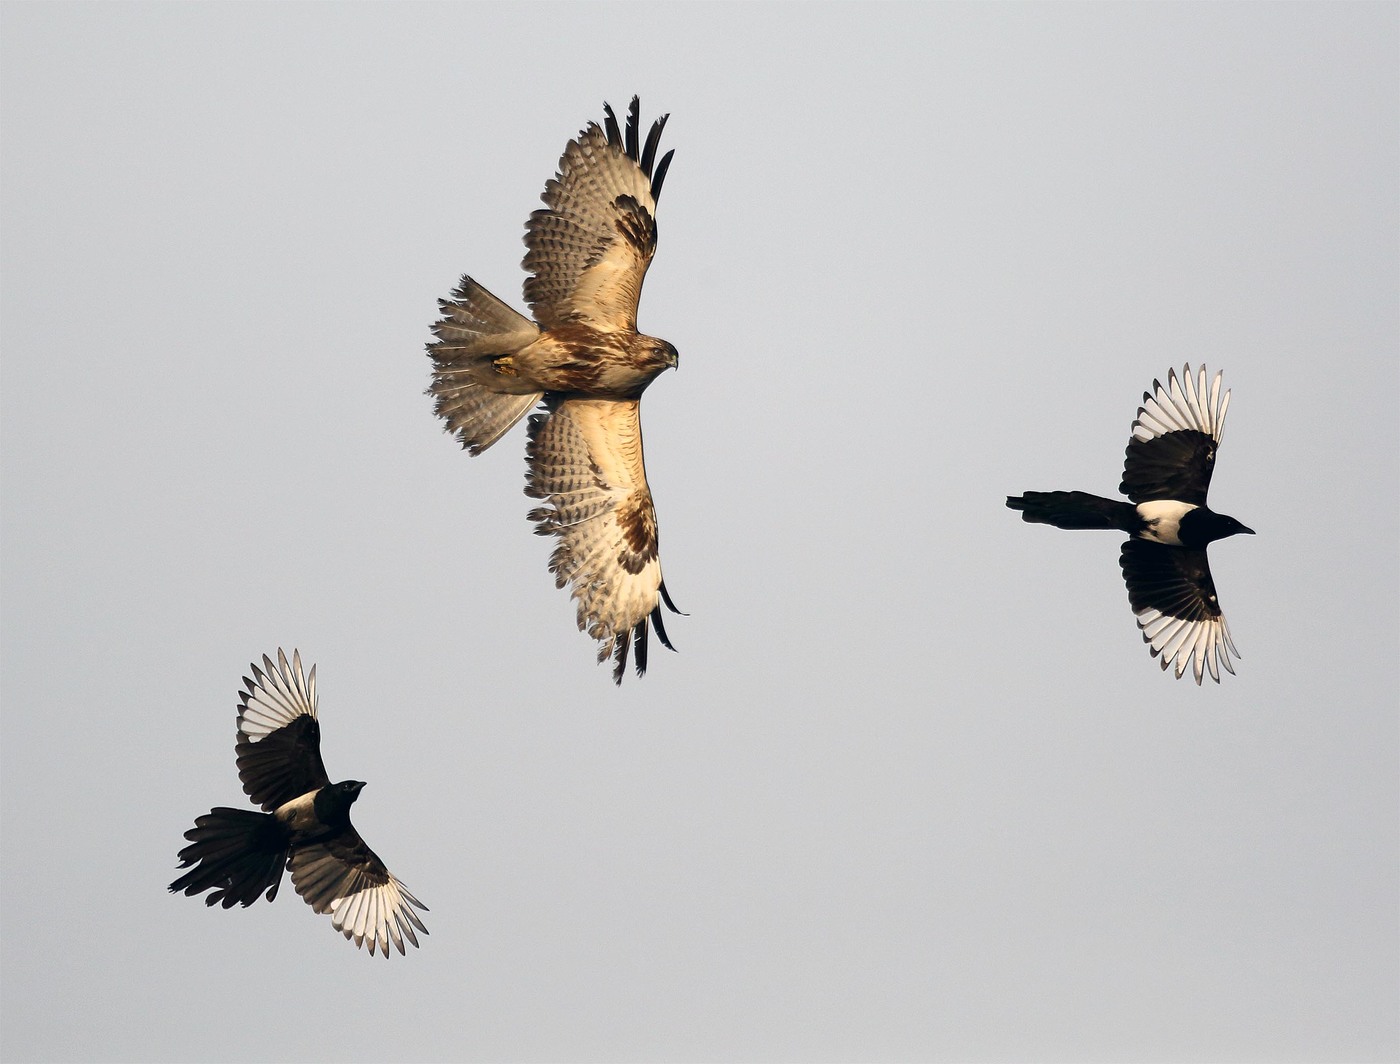 Magpies elta suð, Golden Horn Bay, Vladivostok